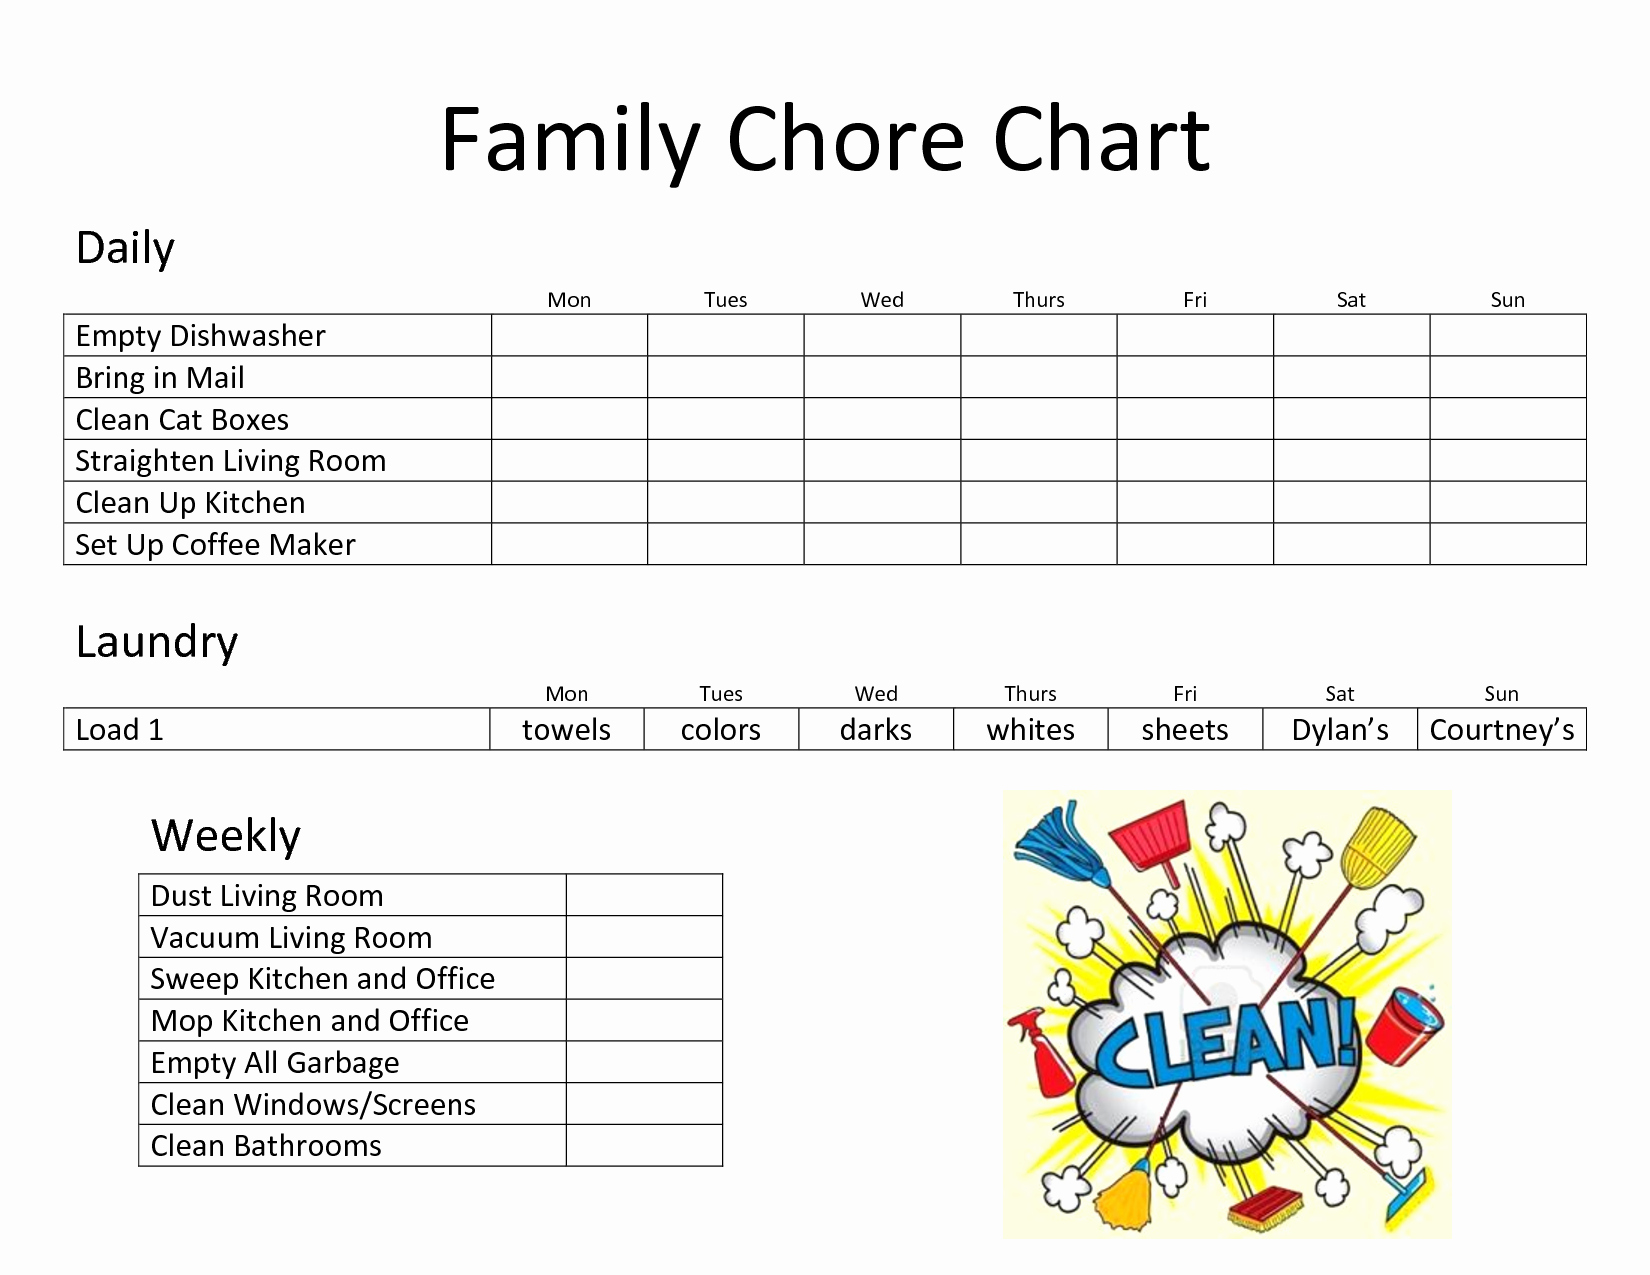 Daily Chore Chart Template Beautiful Daily Family Chore Chart Template Chore Charts